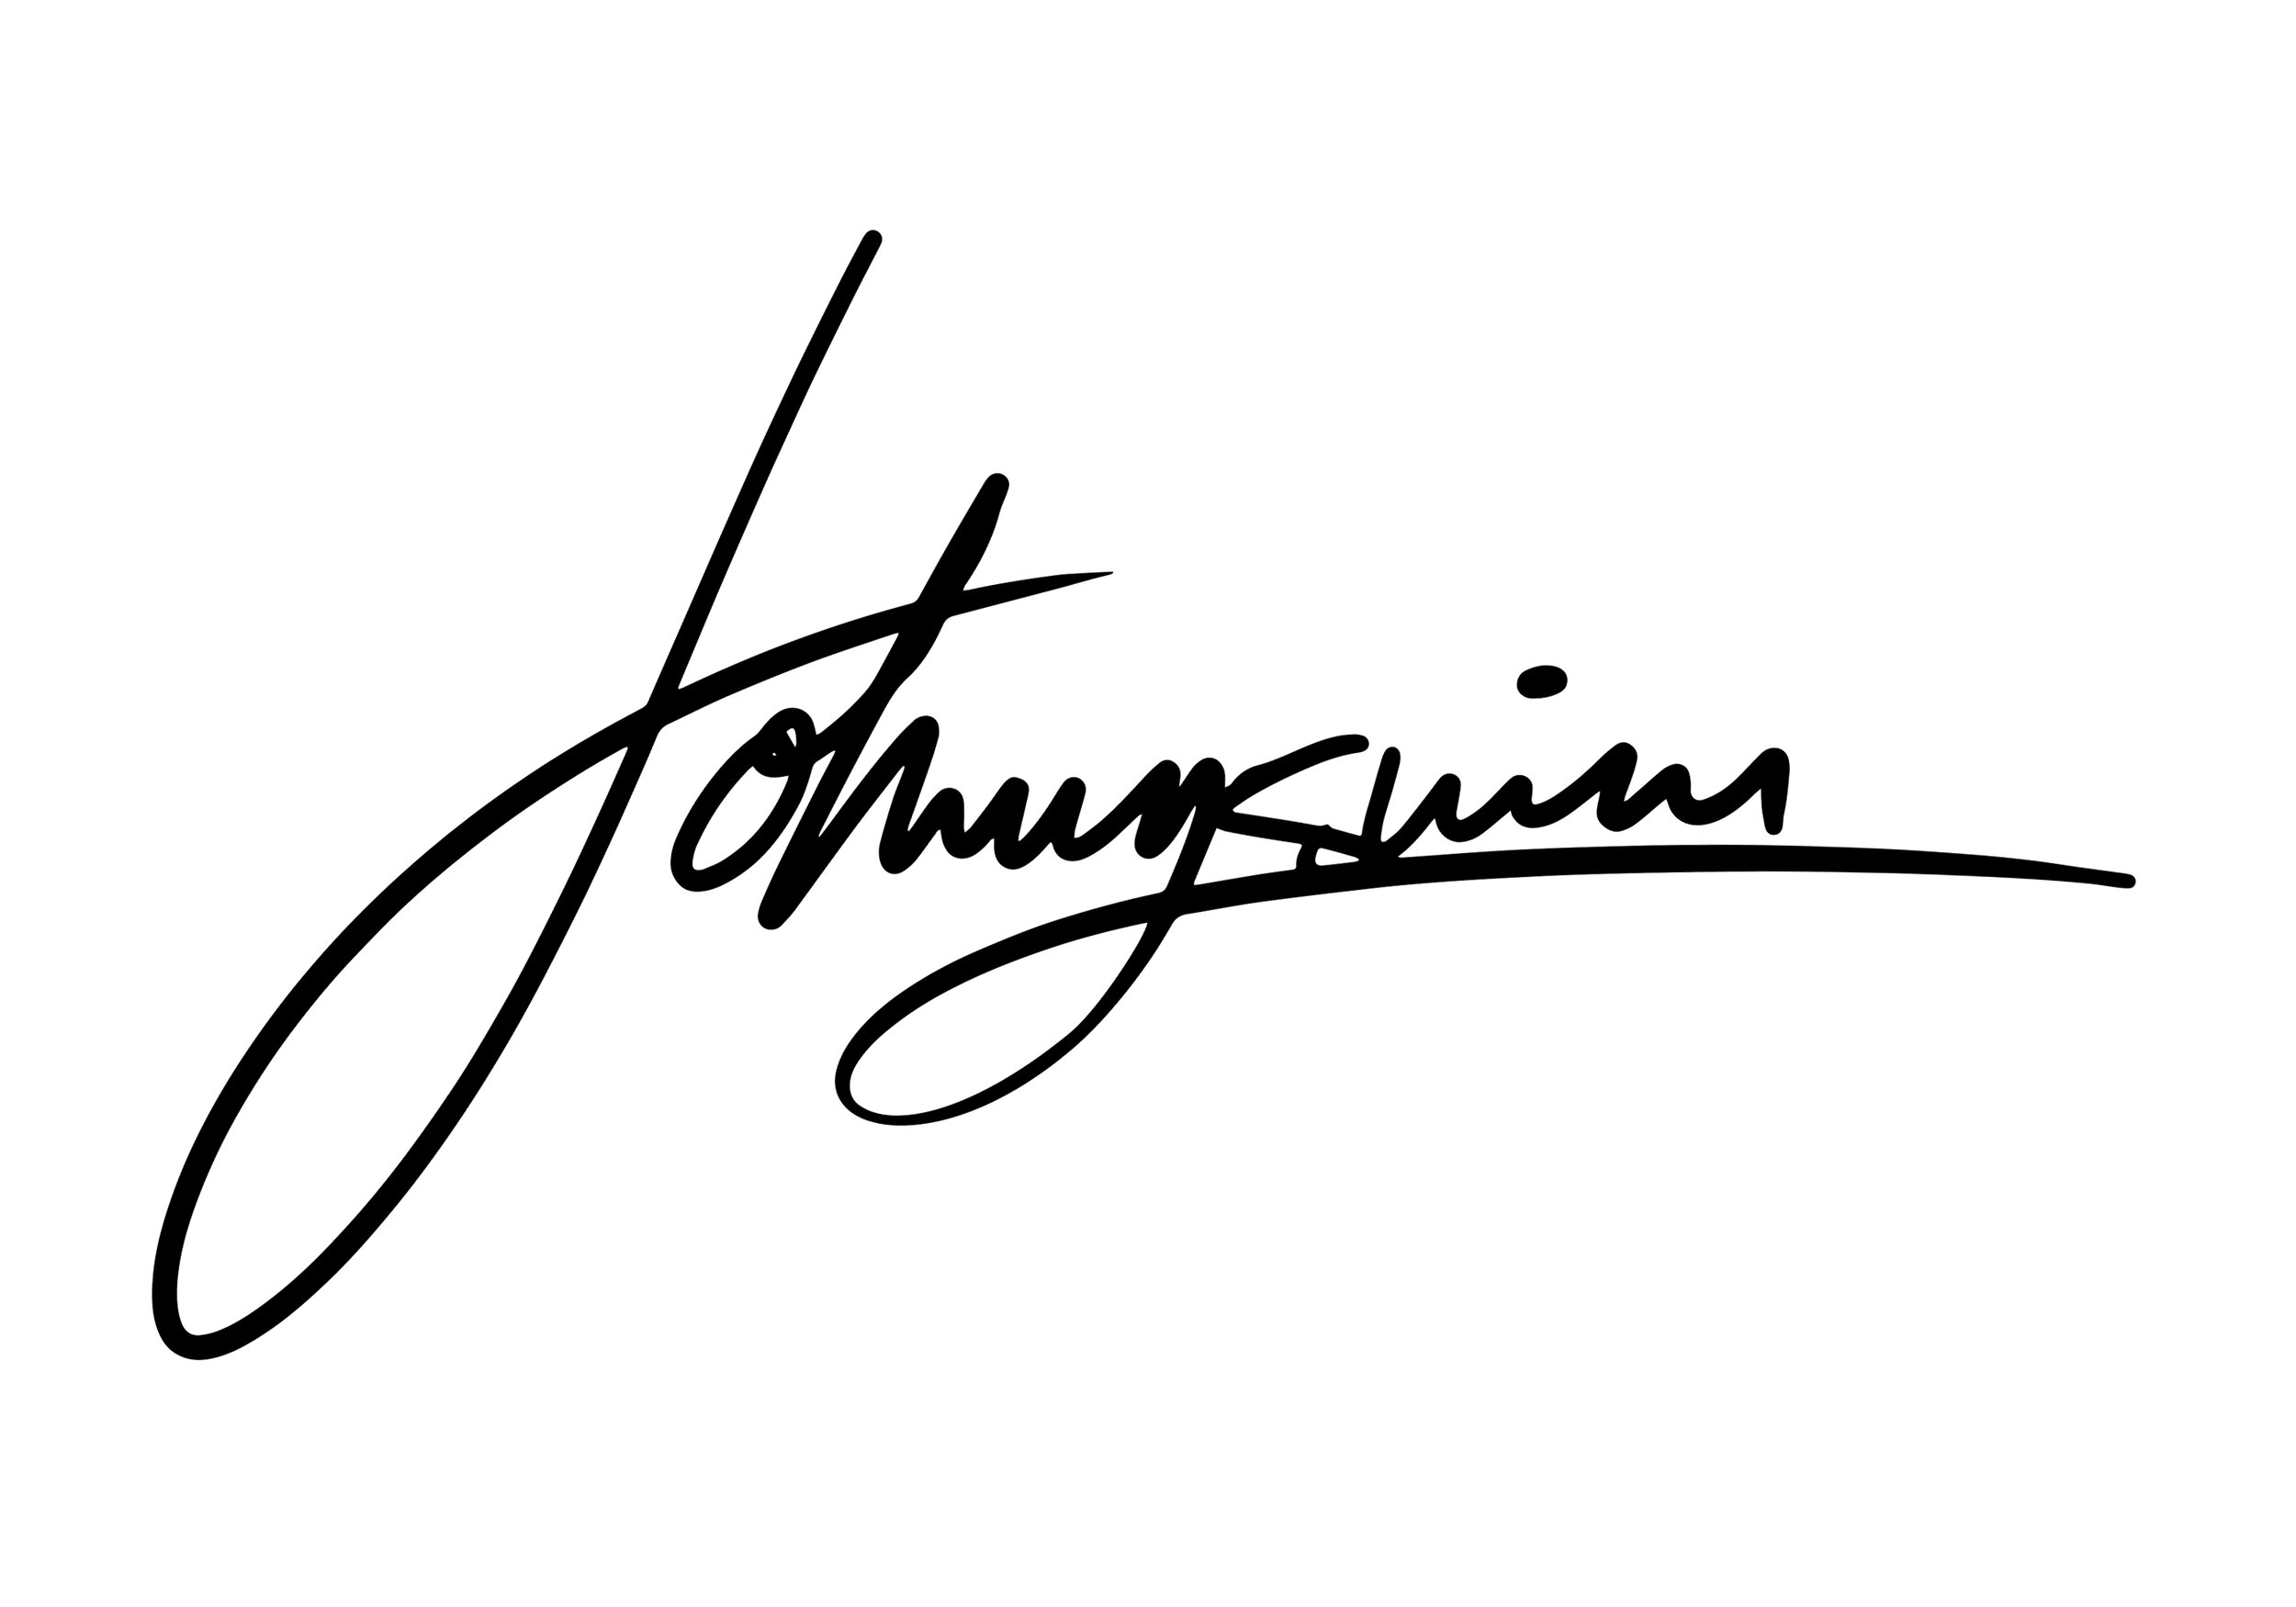 JOHNNYSWIM - Songs With Strangers Vinyl